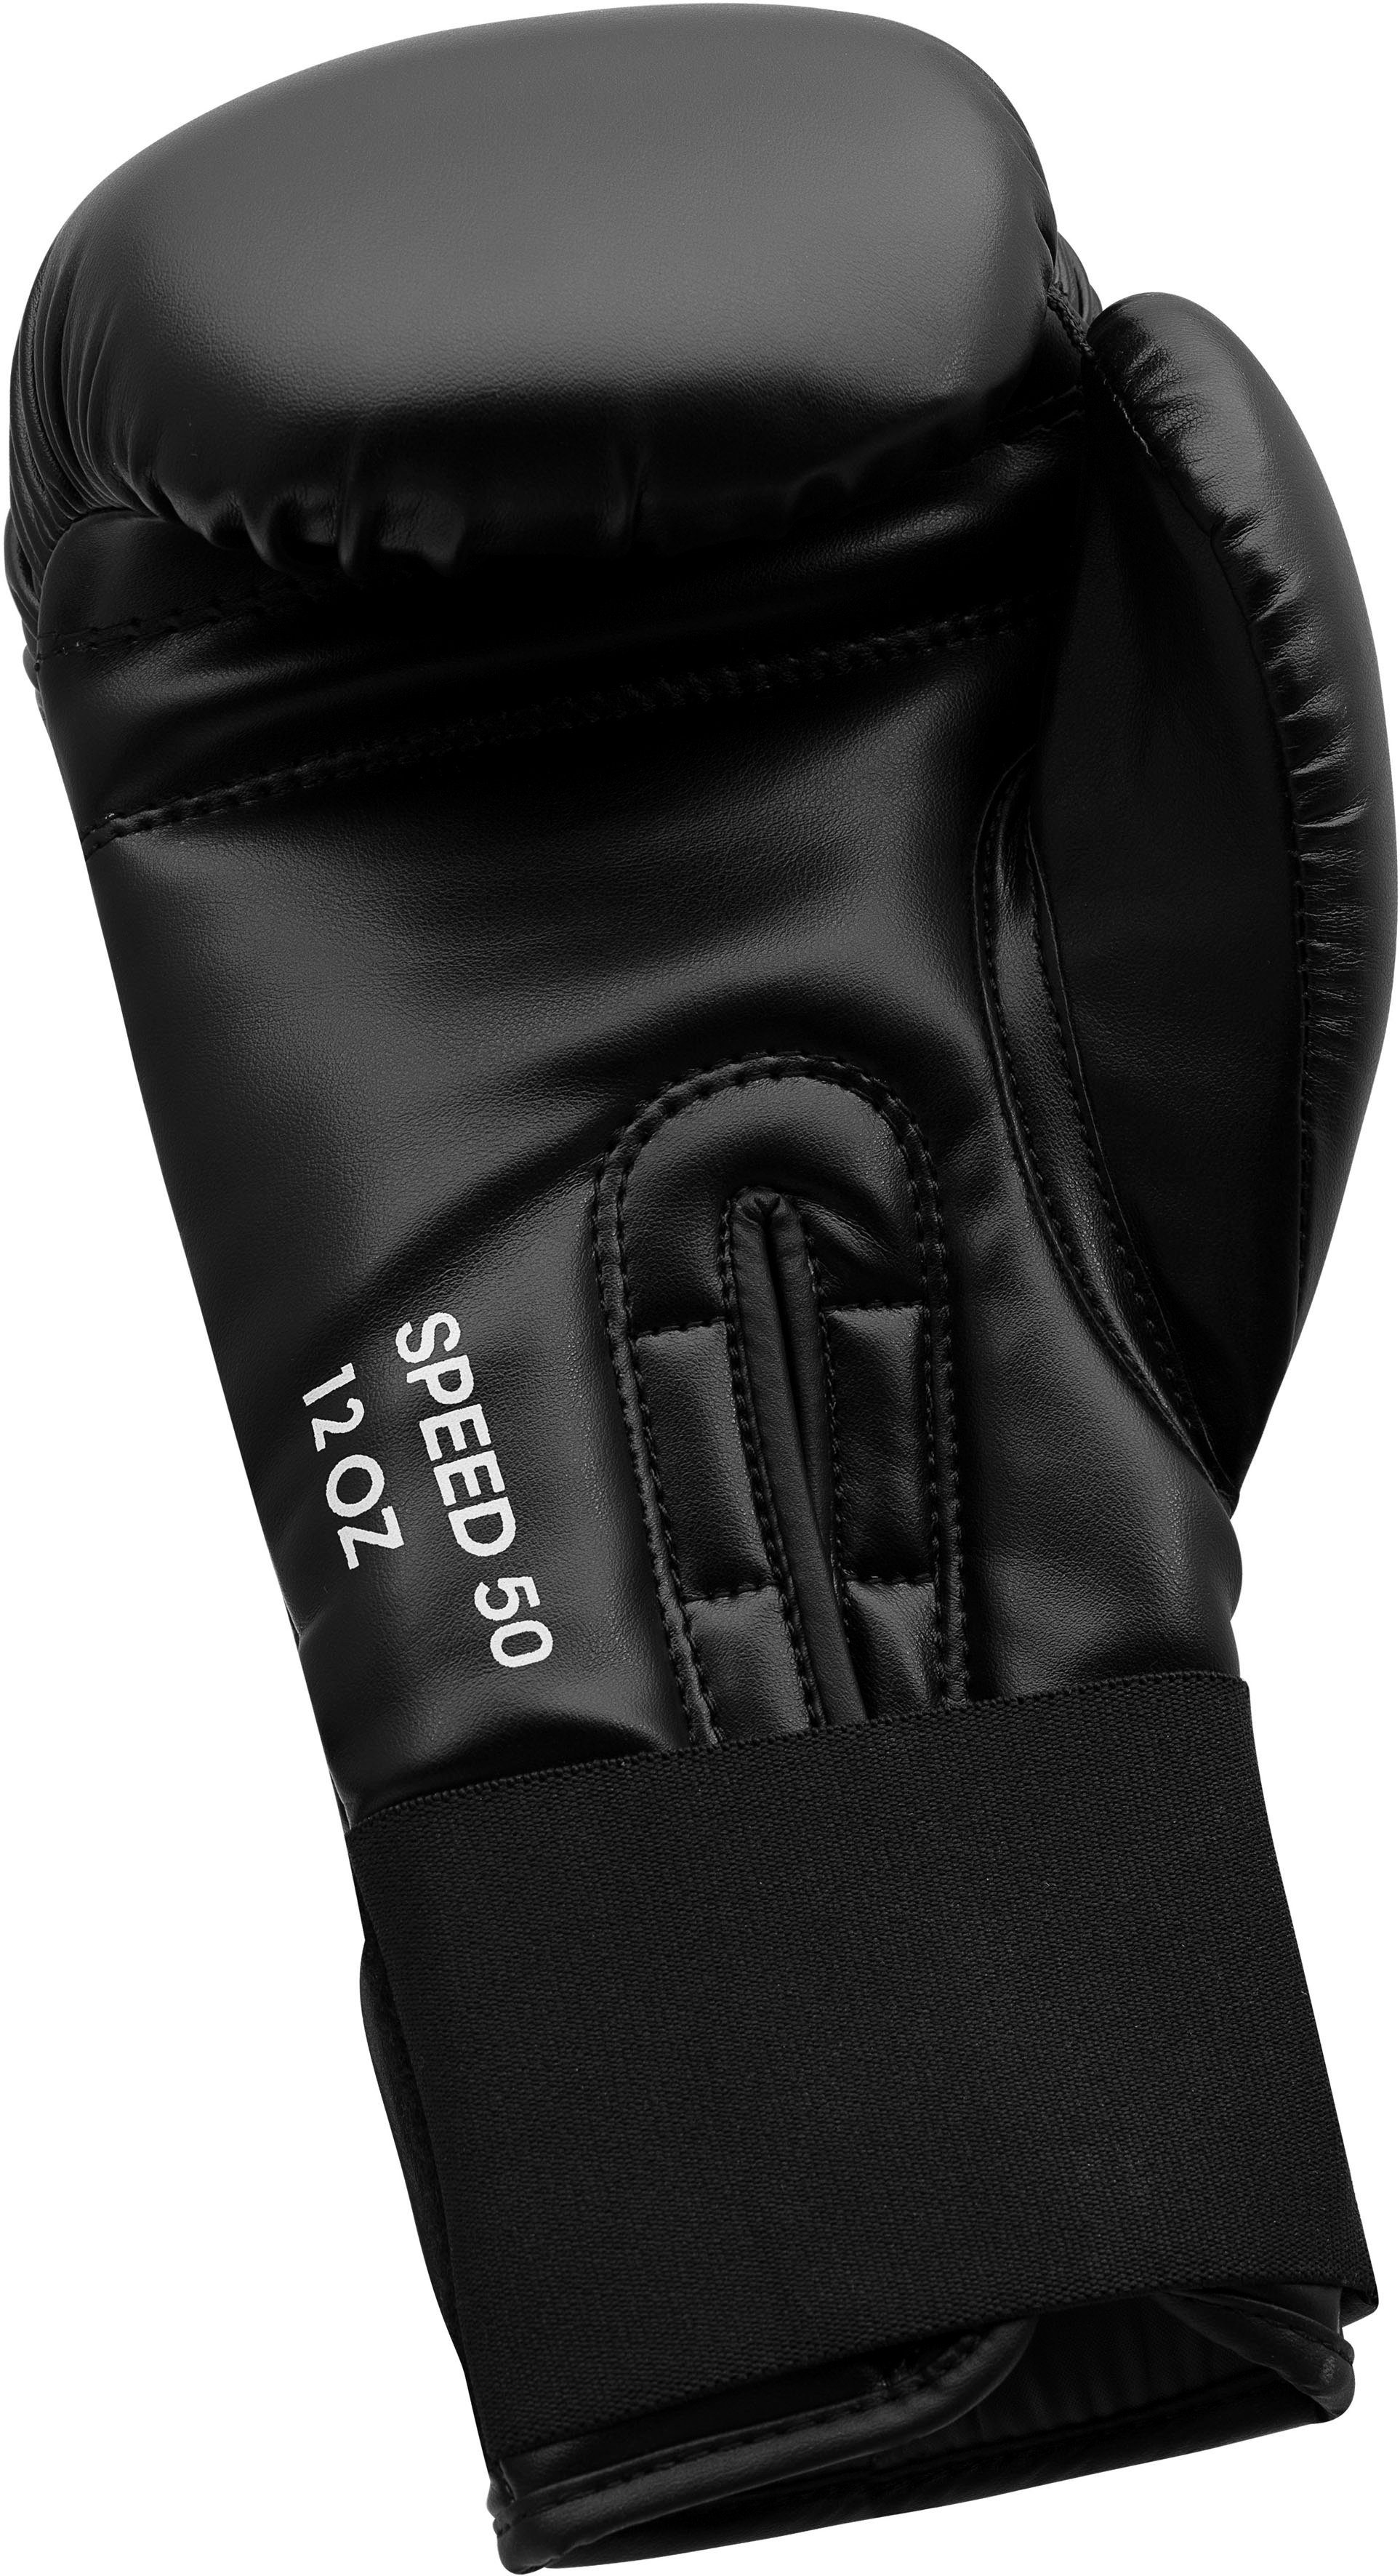 Kinderboxhandschuhe Performance adidas Speed 50 schwarz/gold